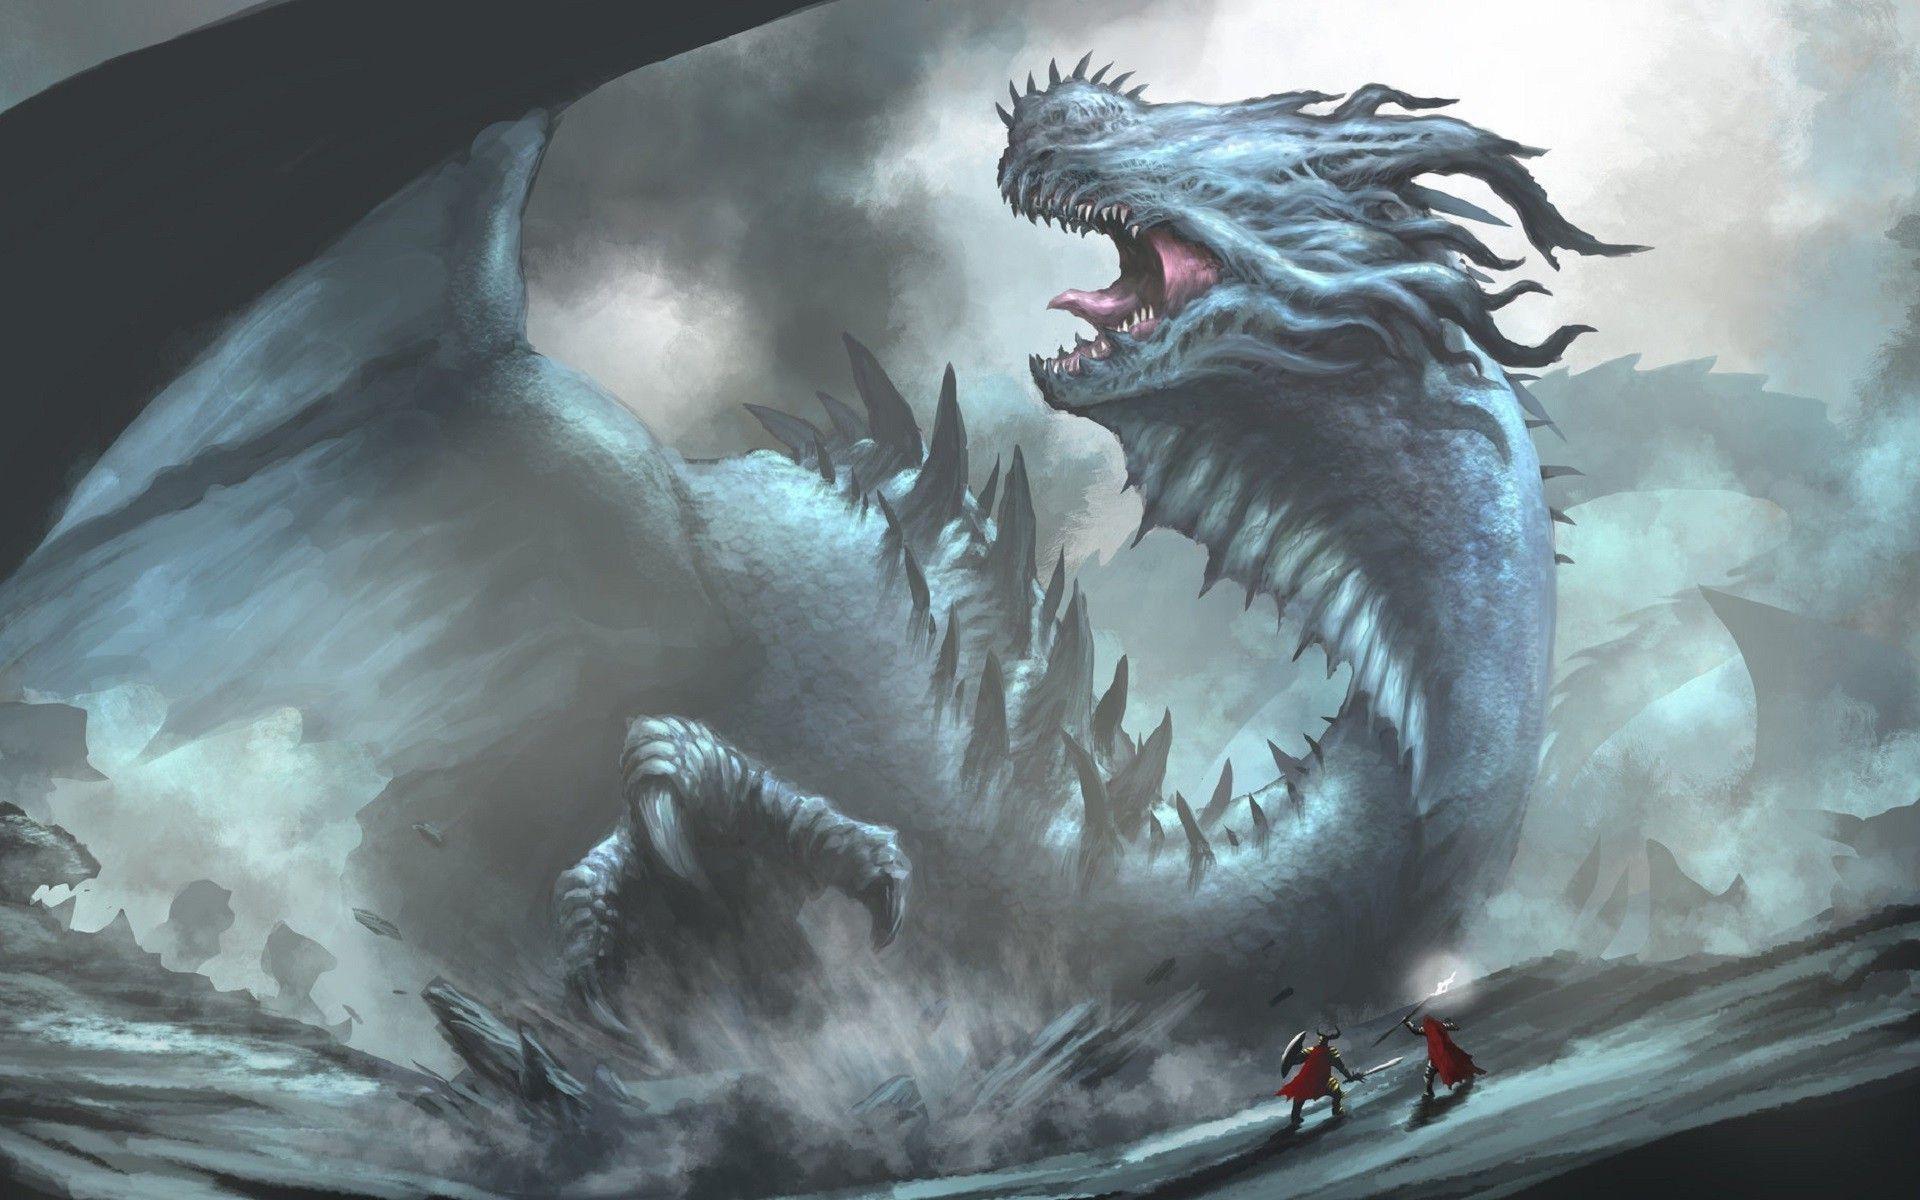 3D Dragon Art Wallpapers - Top Free 3D Dragon Art Backgrounds ...